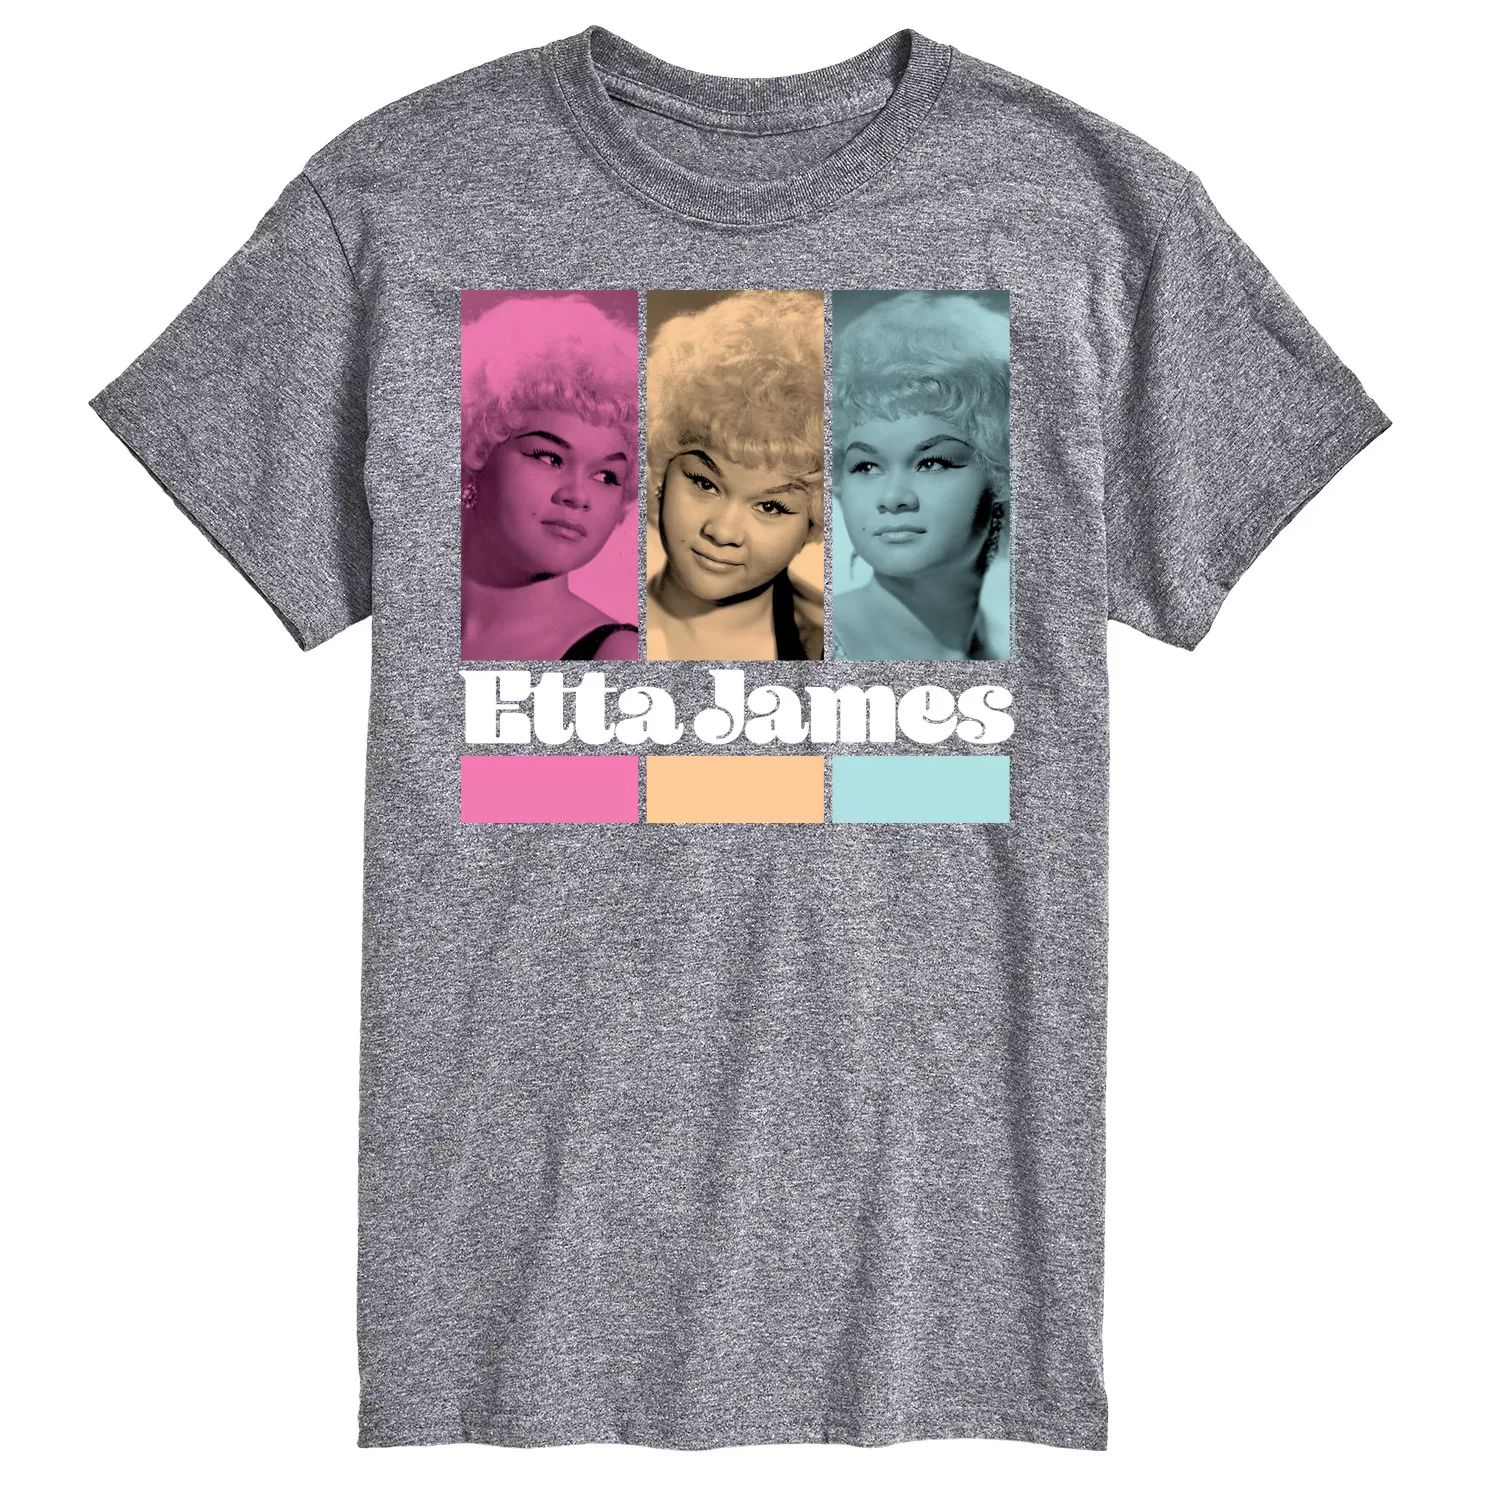 Футболка Big & Tall Etta James с сеткой License, серый